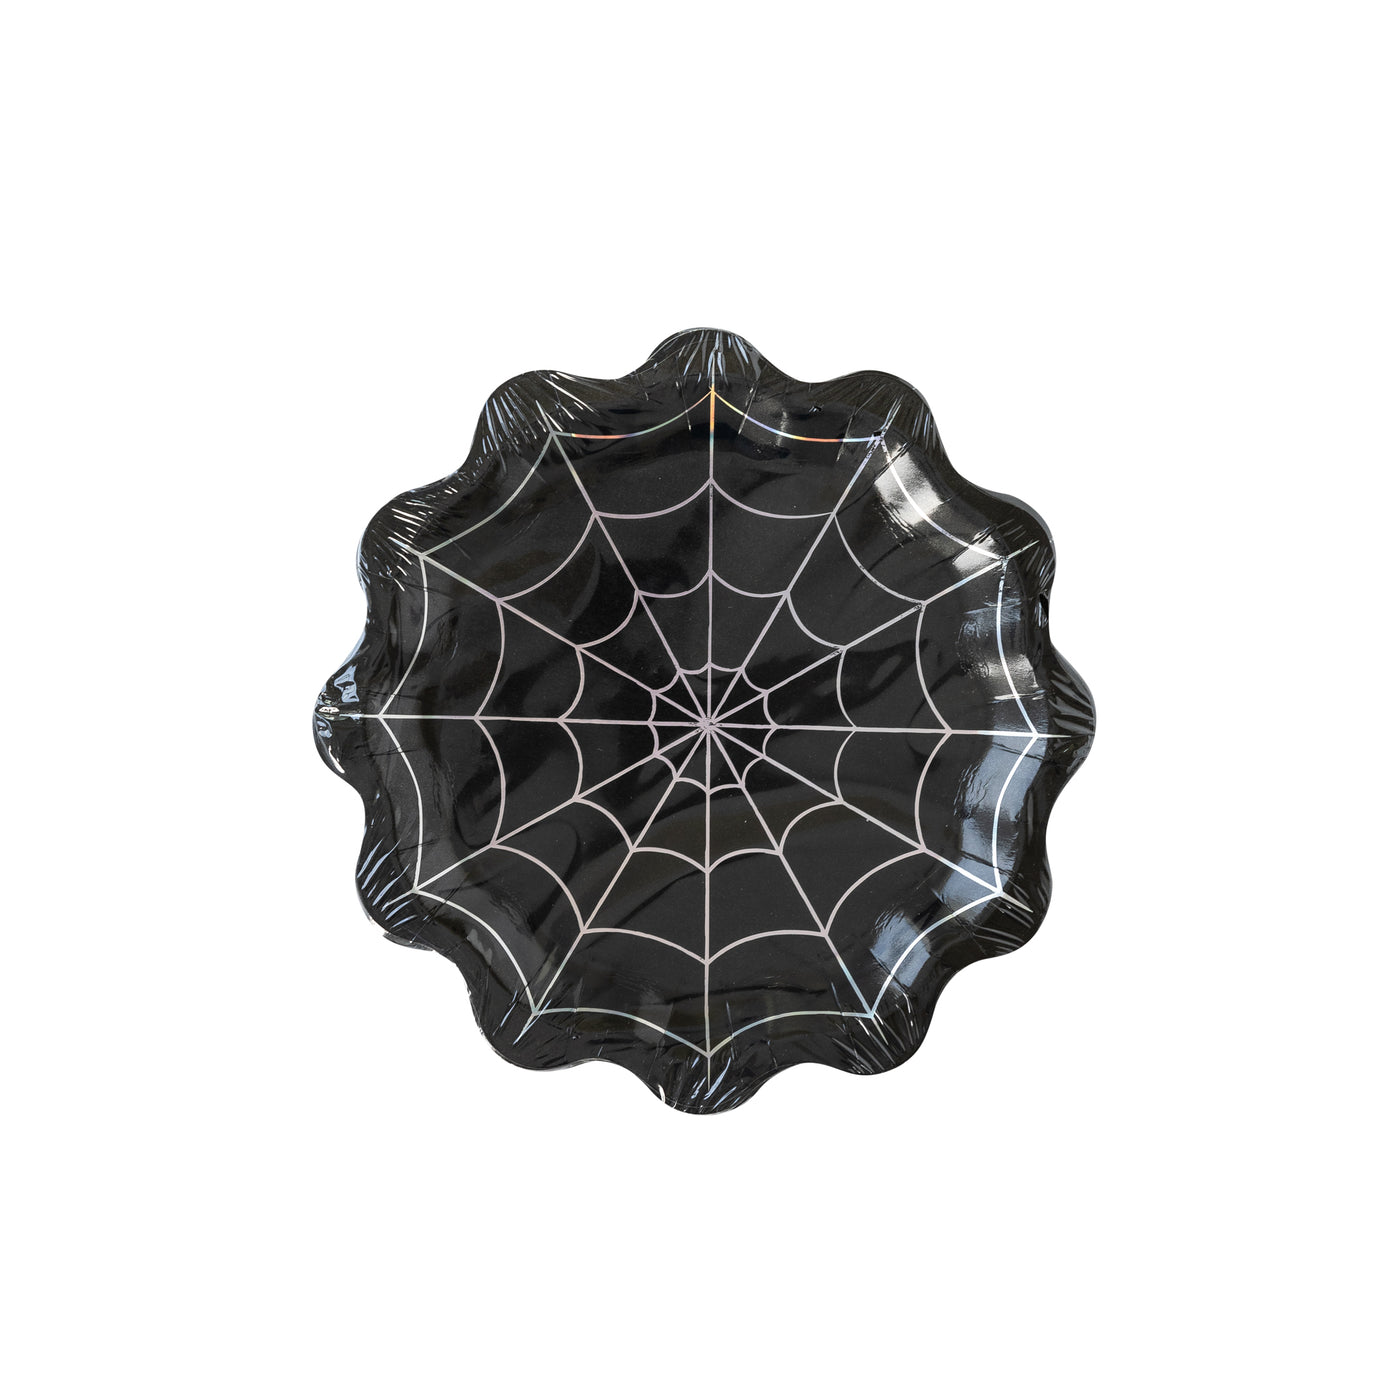 PLTS337B - Holographic Web Shaped Plates